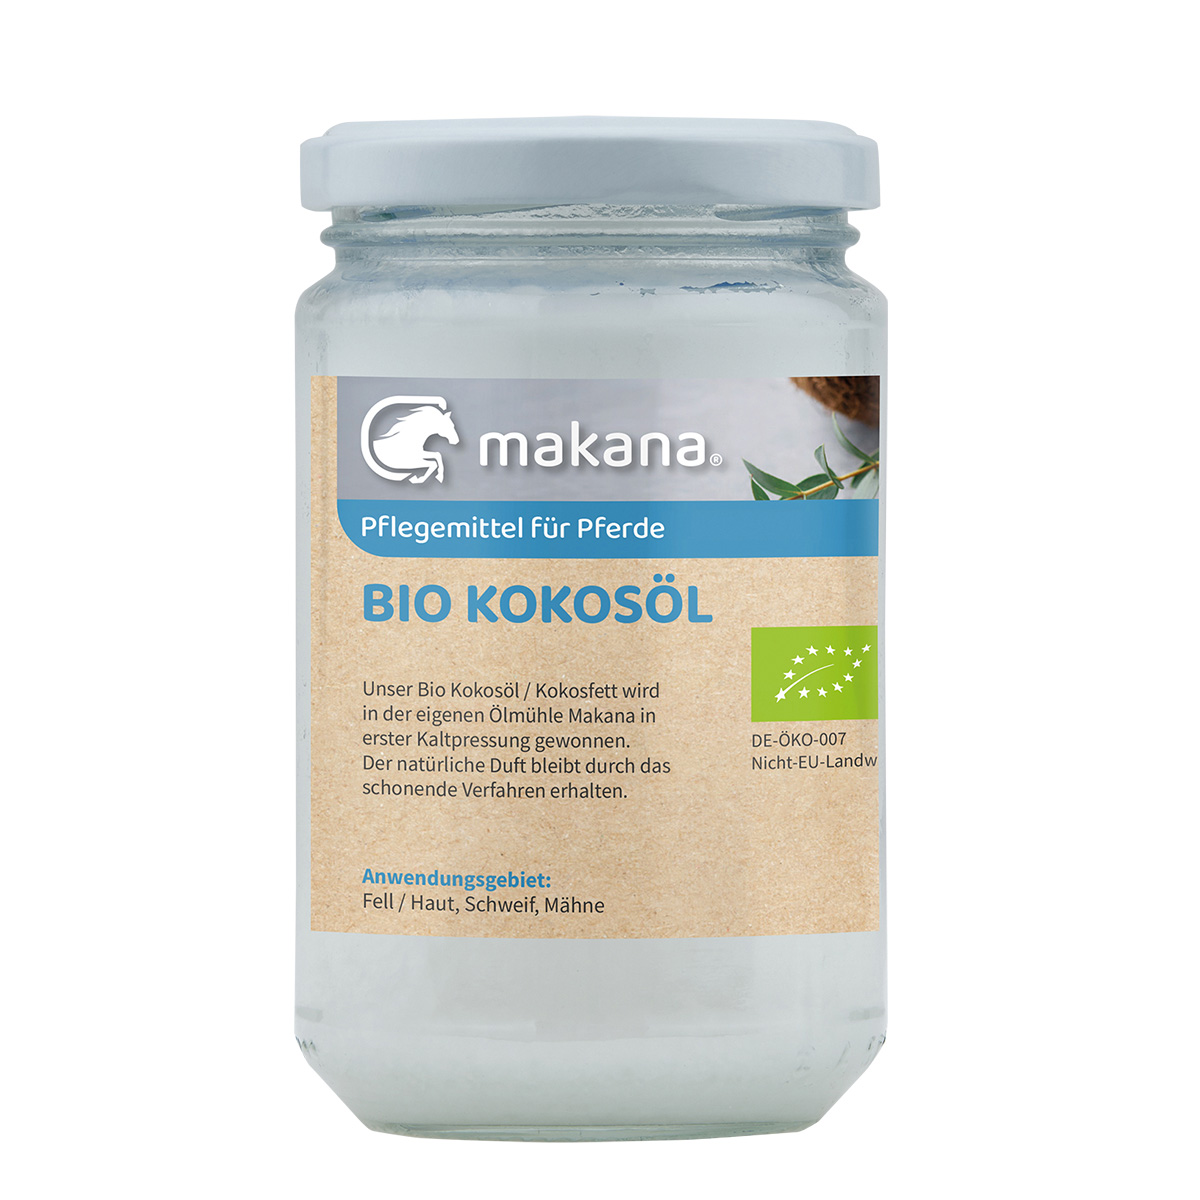 Makana BIO Kokosöl/ Kokosfett für Pferde, kaltgepresst, 250 ml Glas